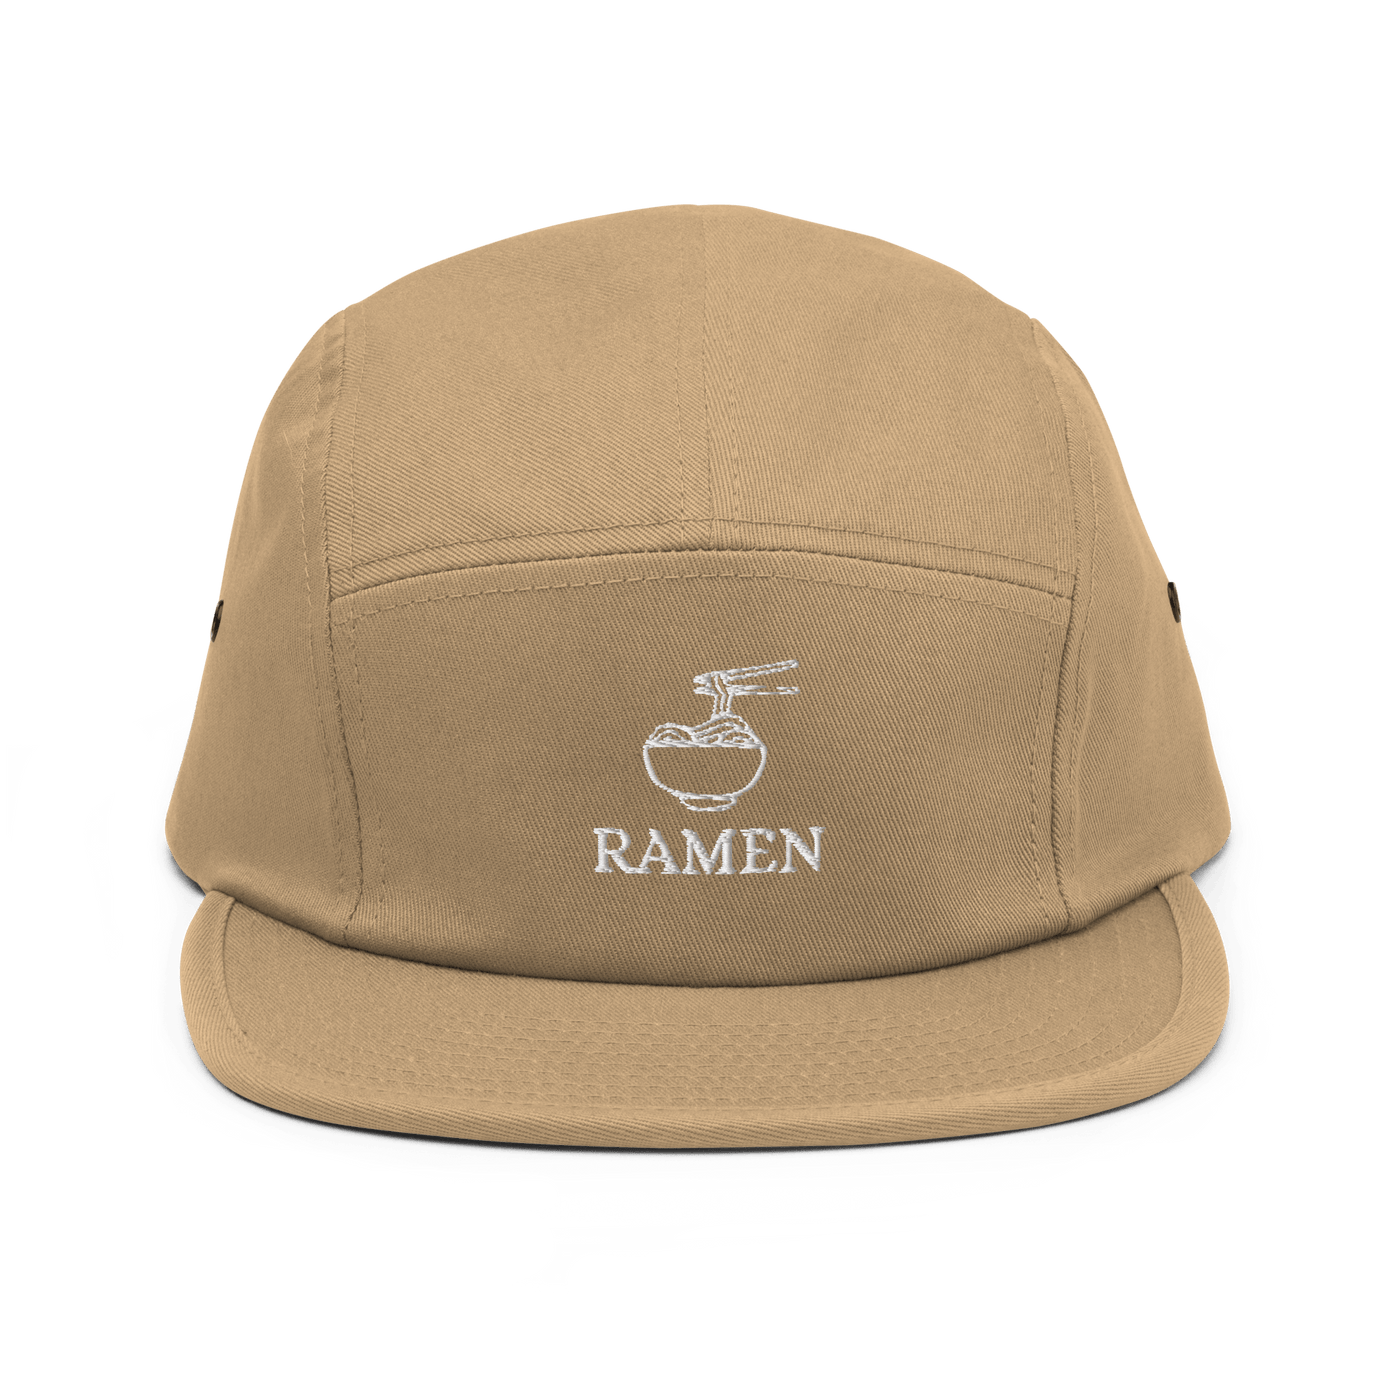 Ramen Five Panel Cap - Khaki - - Just Another Cap Store